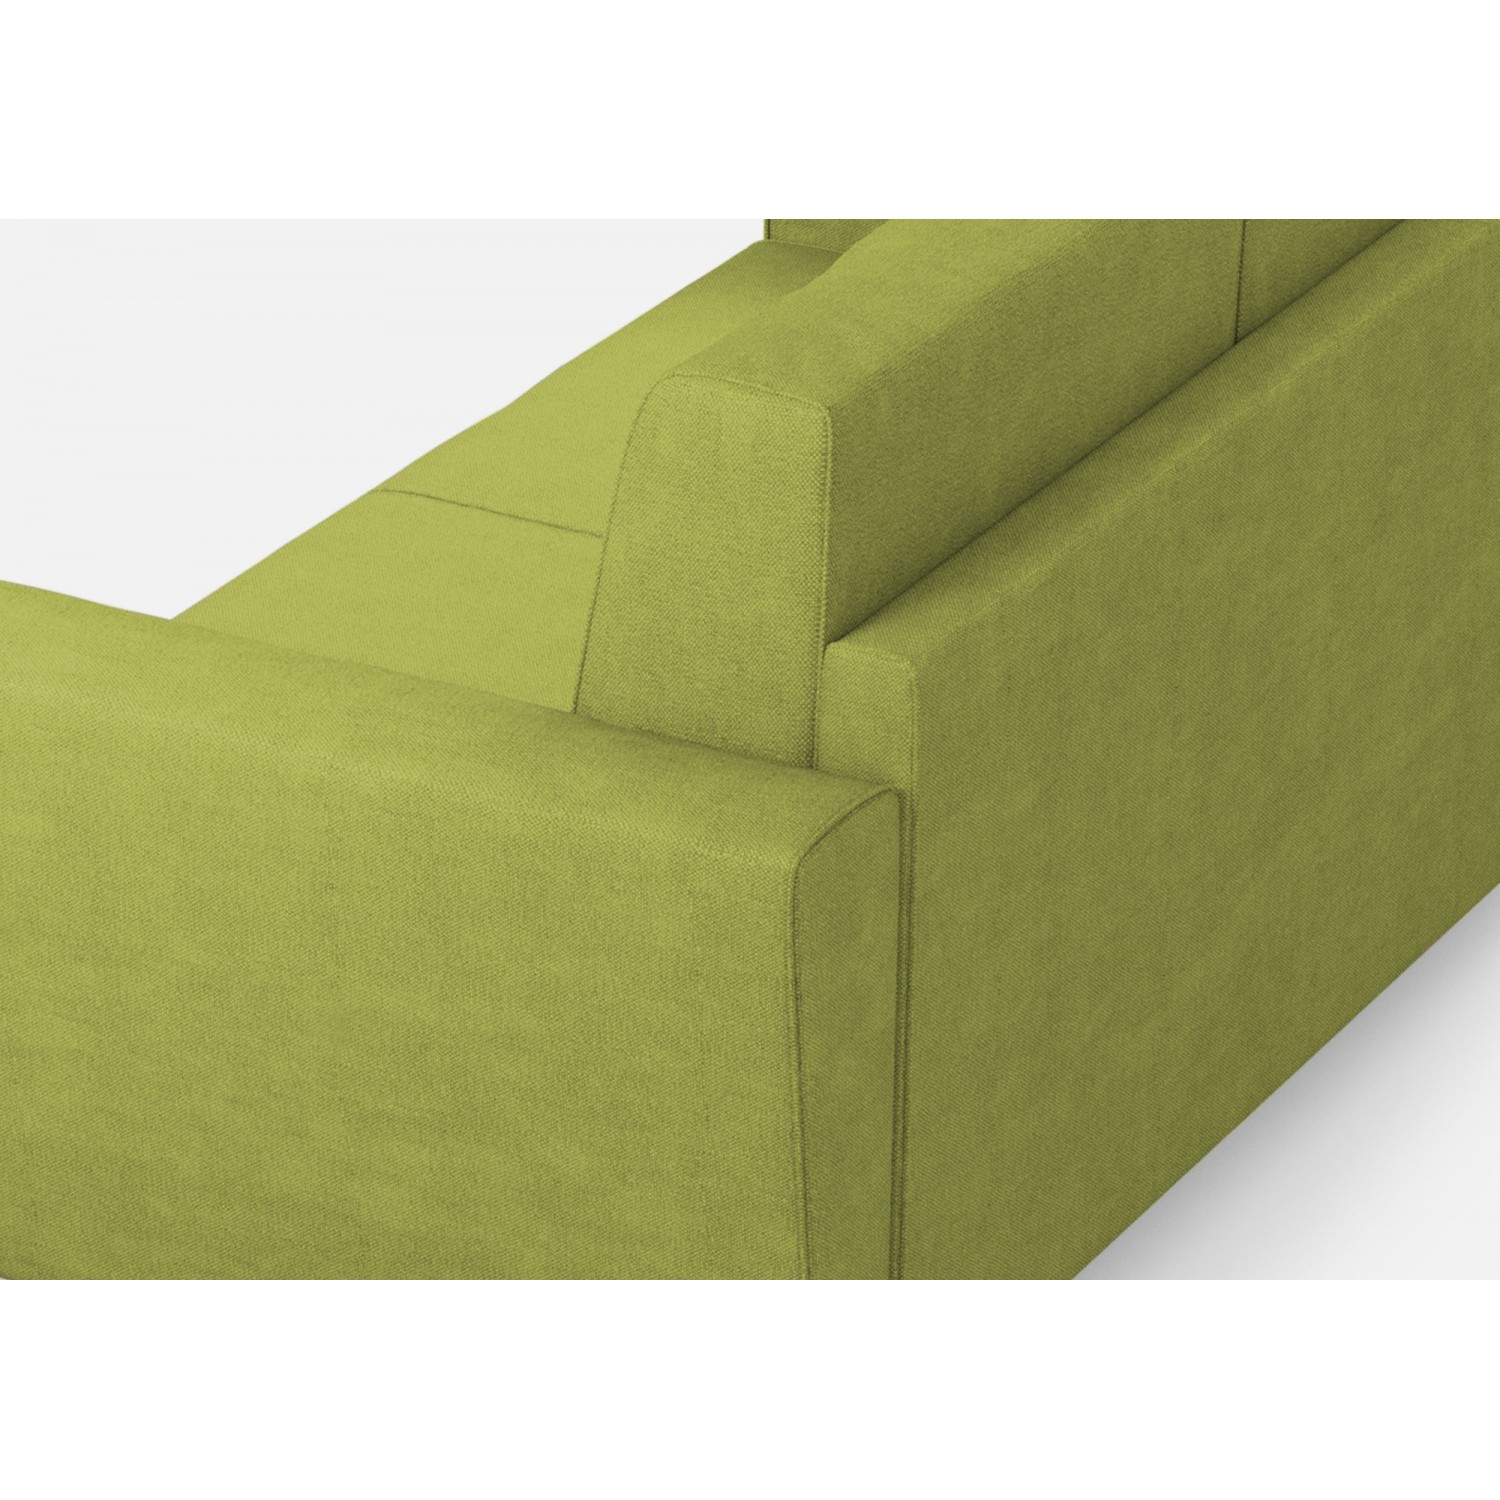 Ityhome Divano Yasel 3 posti (tre sedute da 60cm)+ angolo + divano 2 posti medio (due sedute da 70cm) misure esterne L.288x248 verde